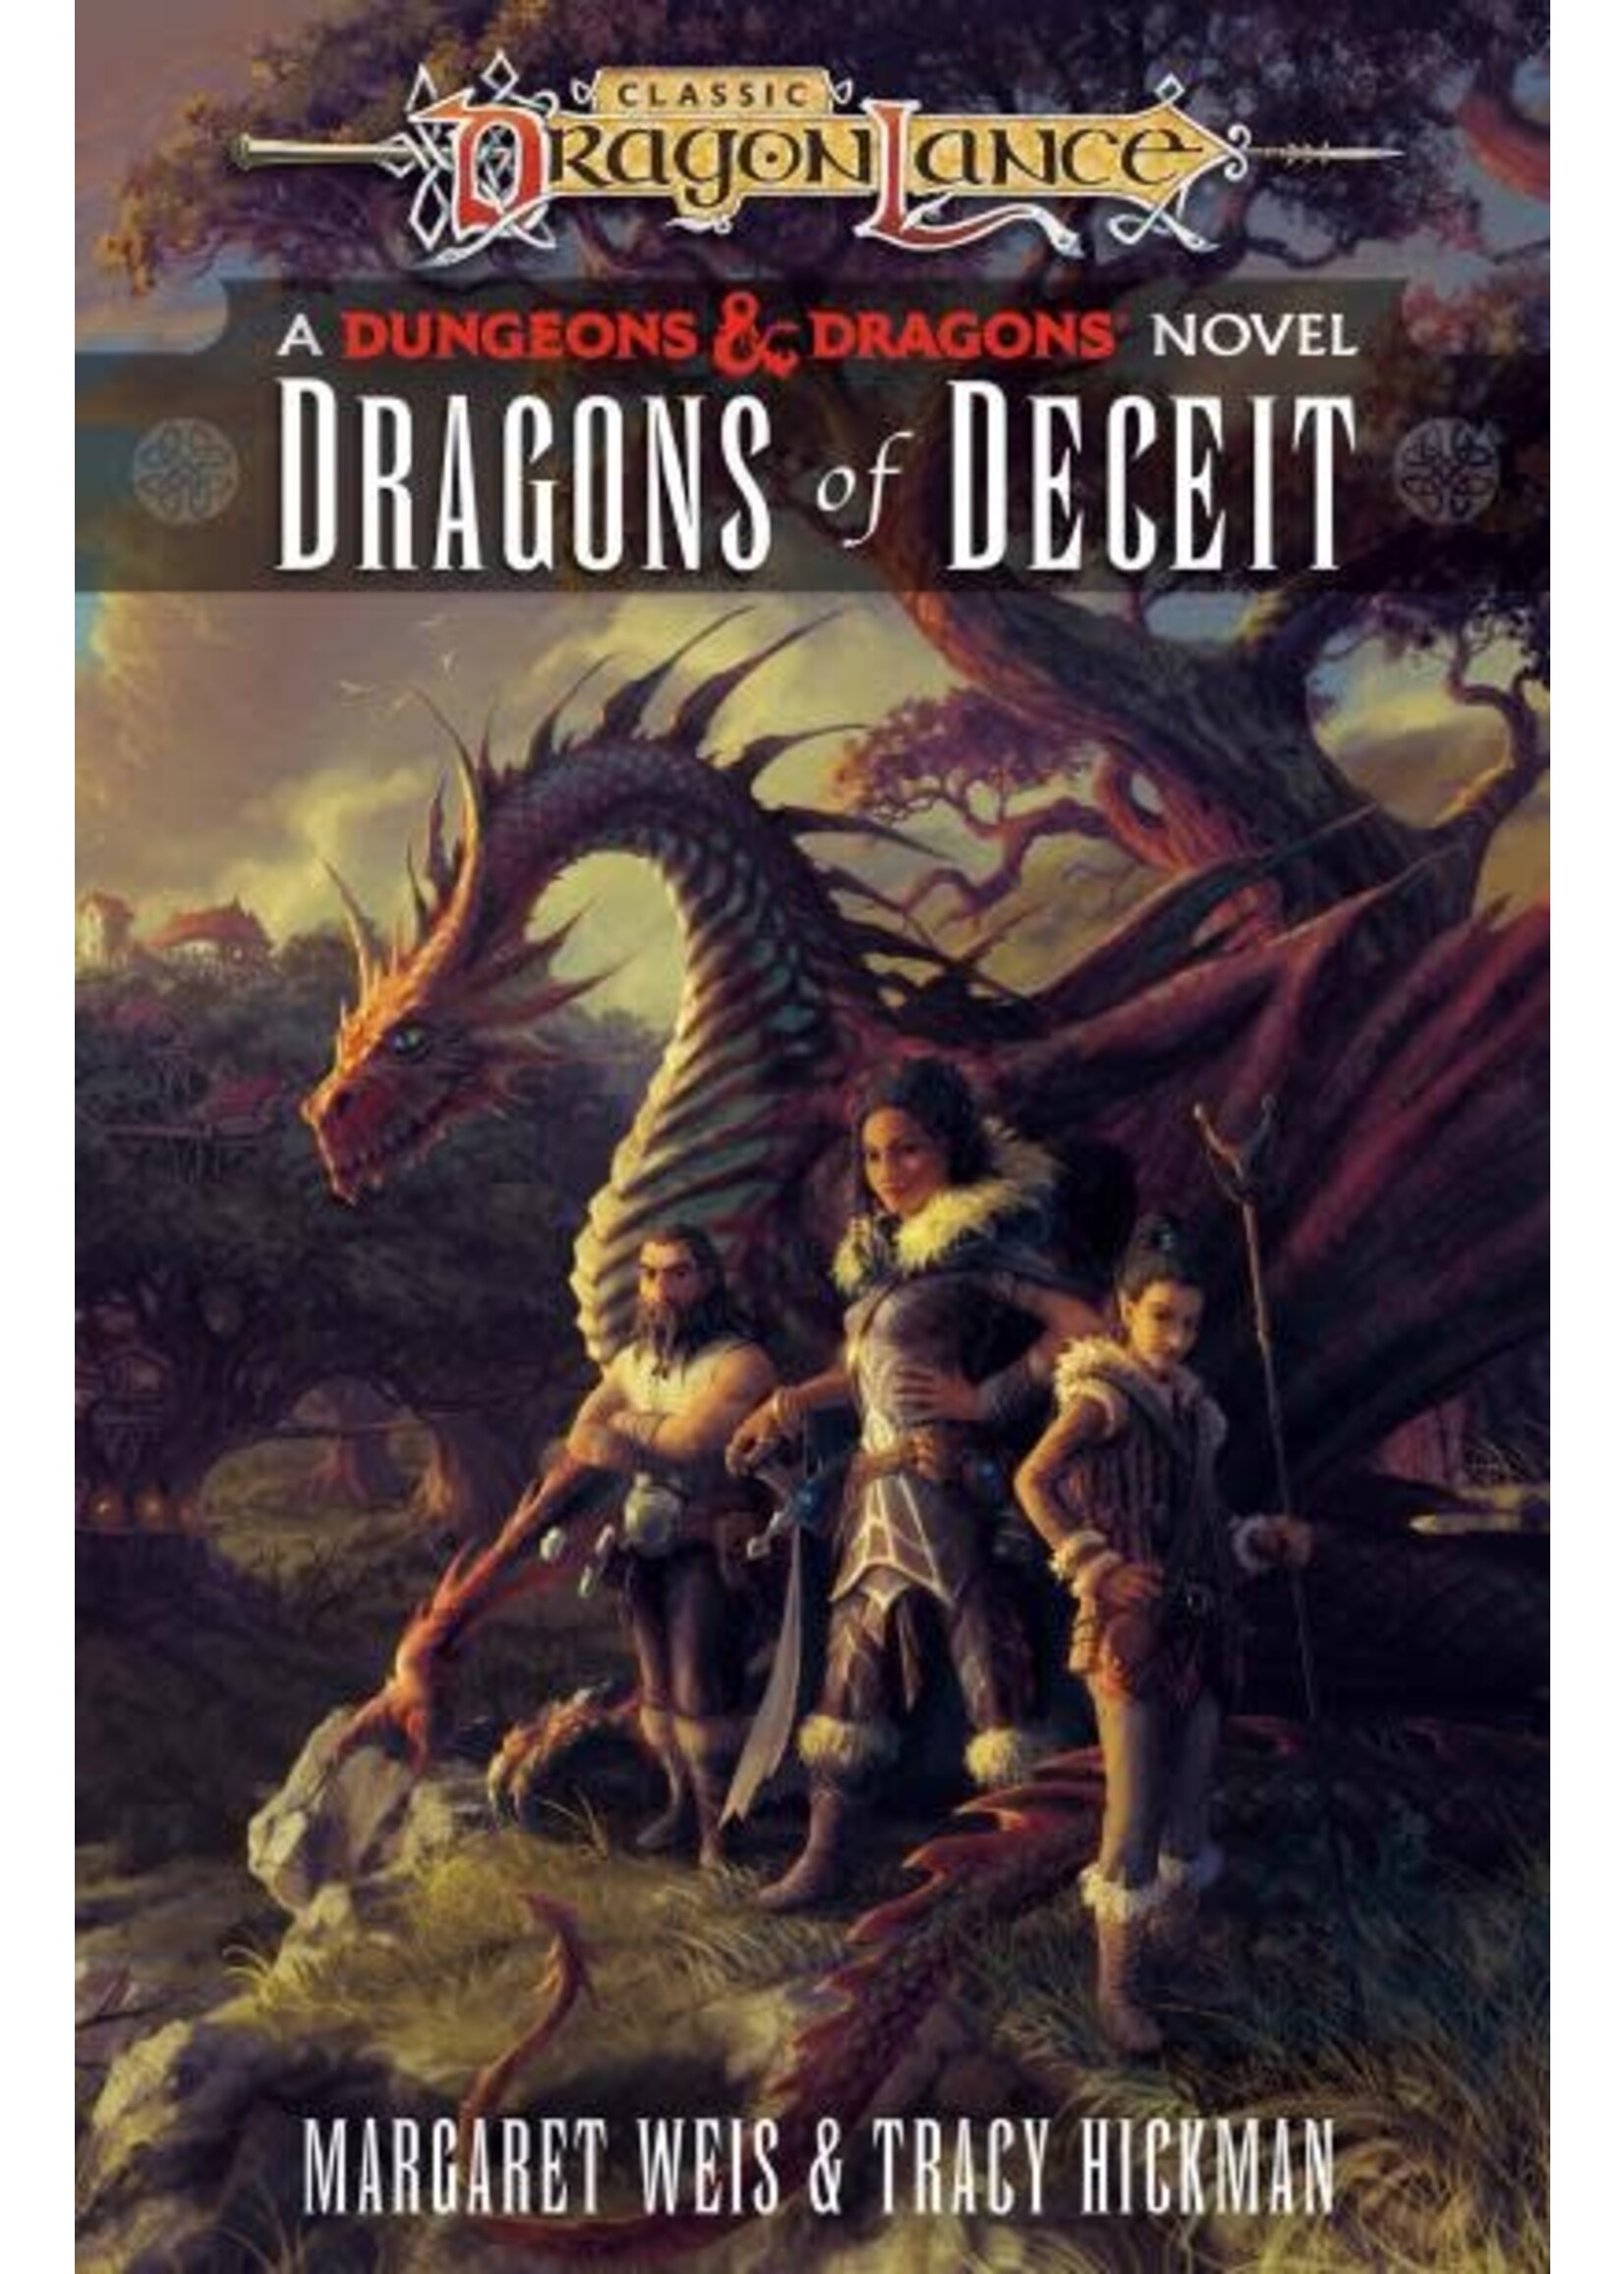 Dragons of Deceit (Dragonlance Destinie #1) by Margaret Weis, Tracy Hickman